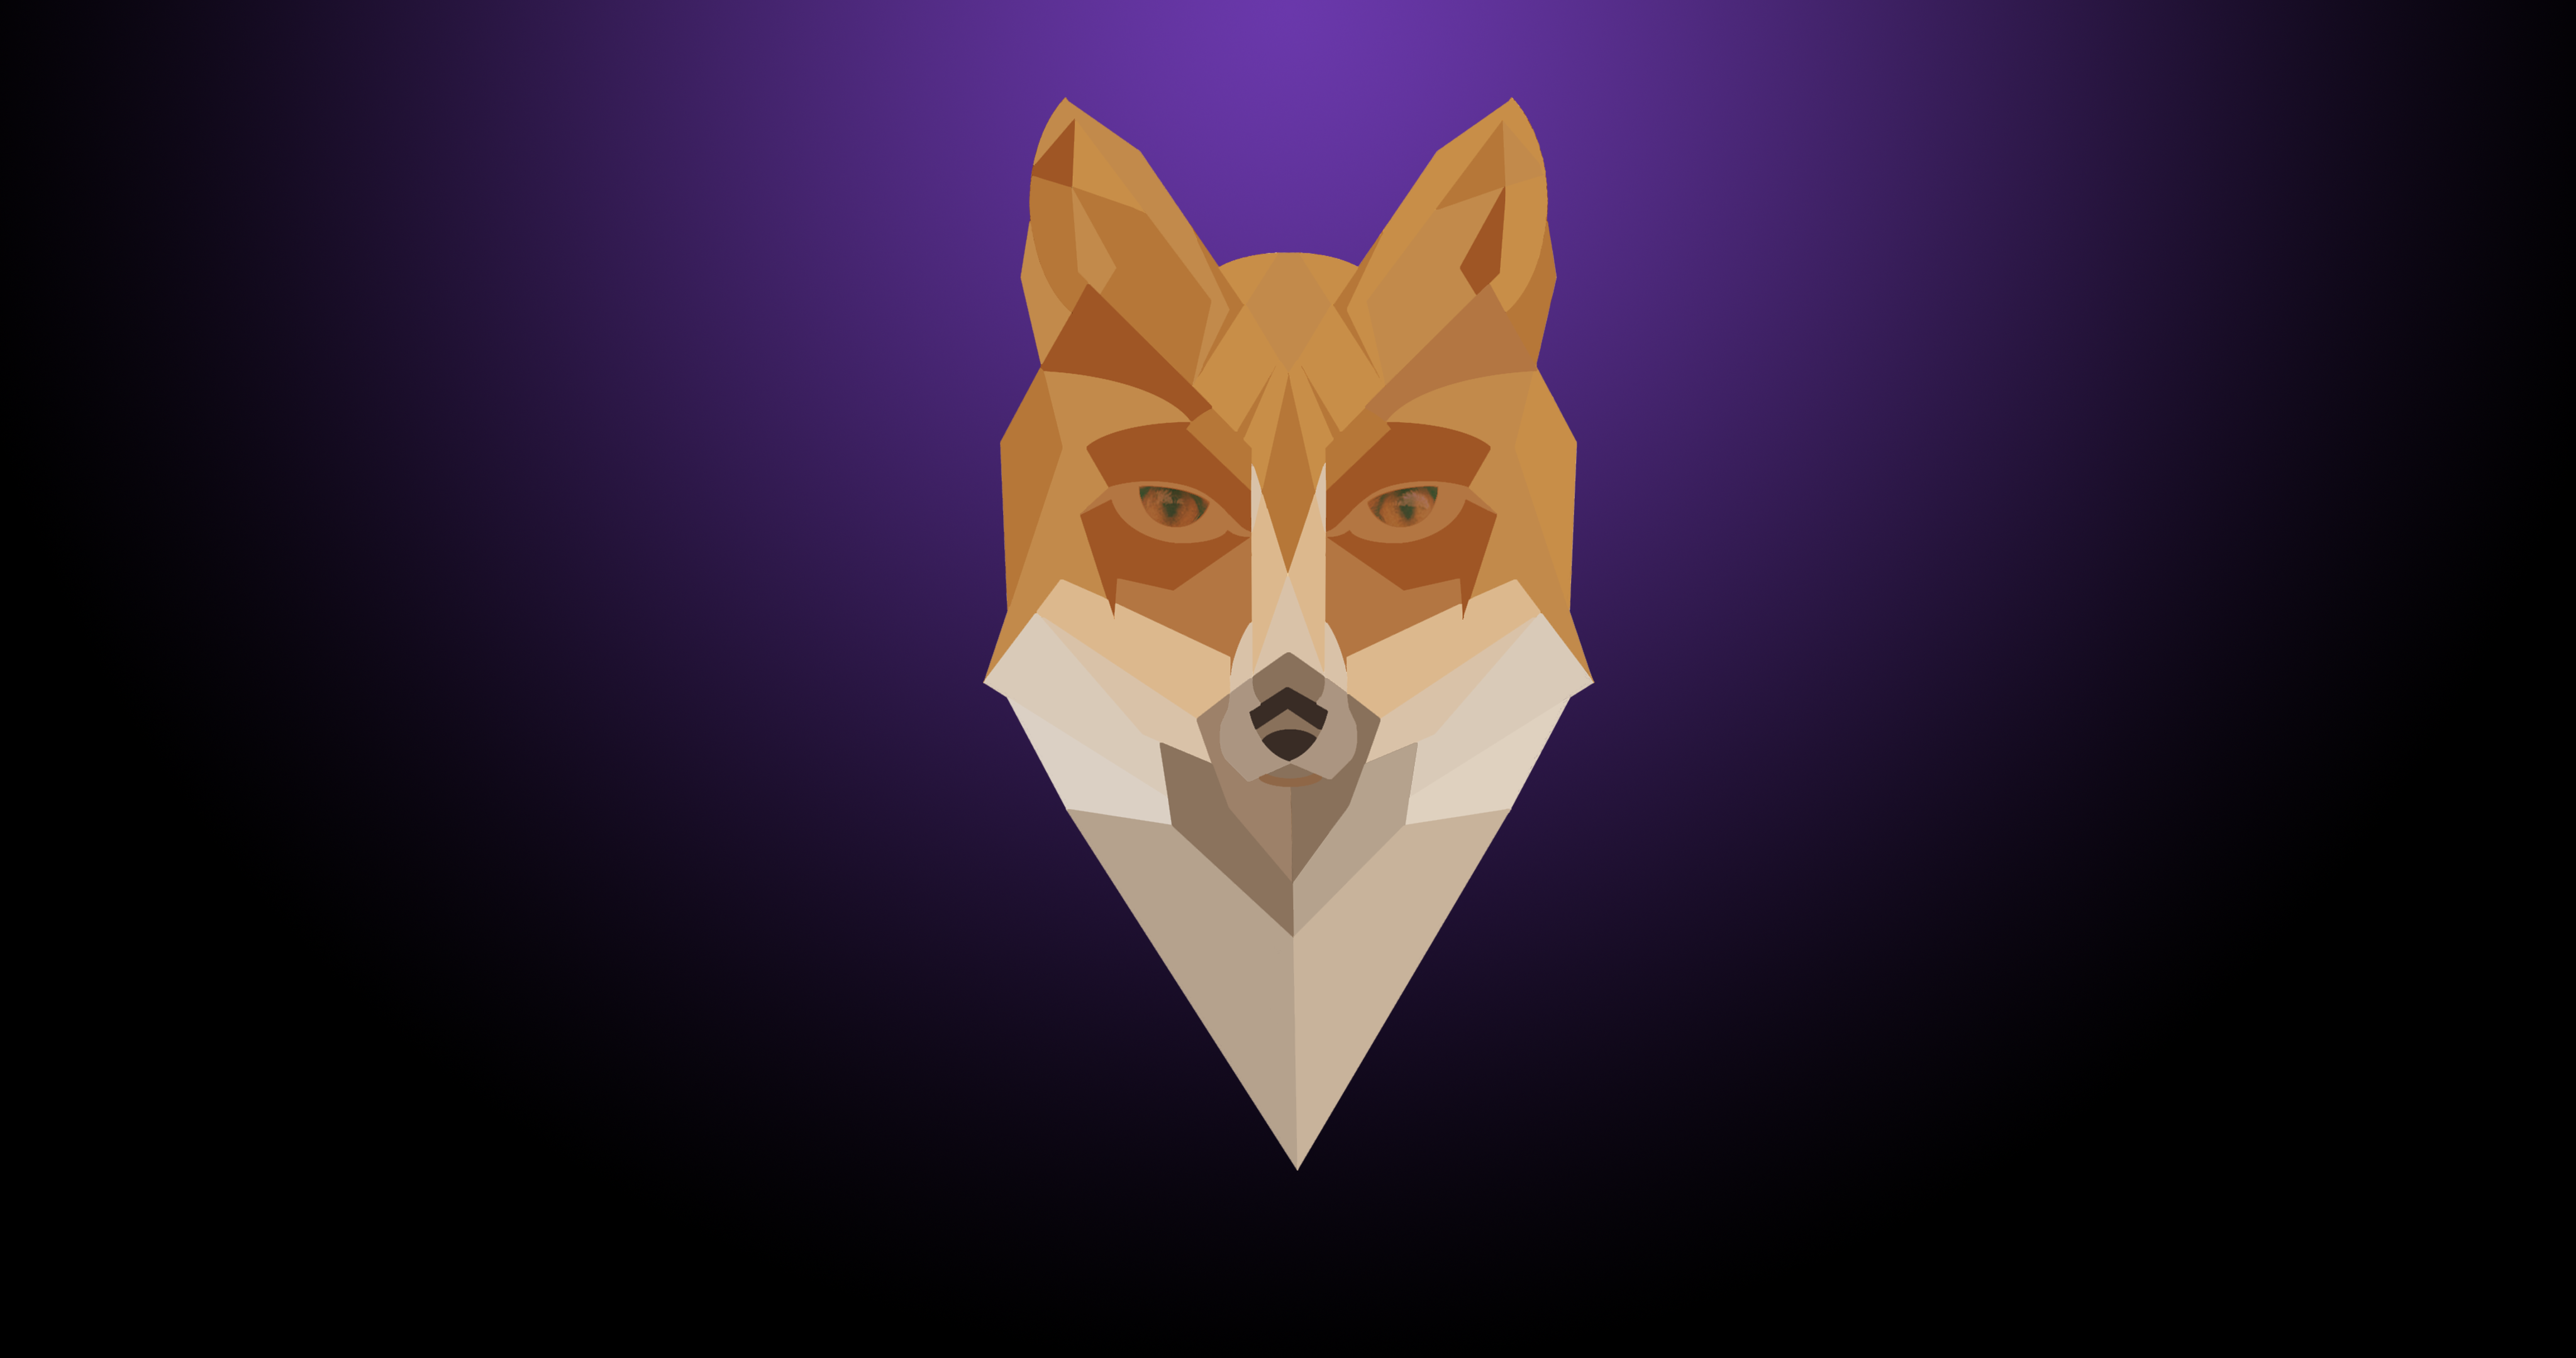 General 4096x2160 minimalism purple fox simple background digital art animals